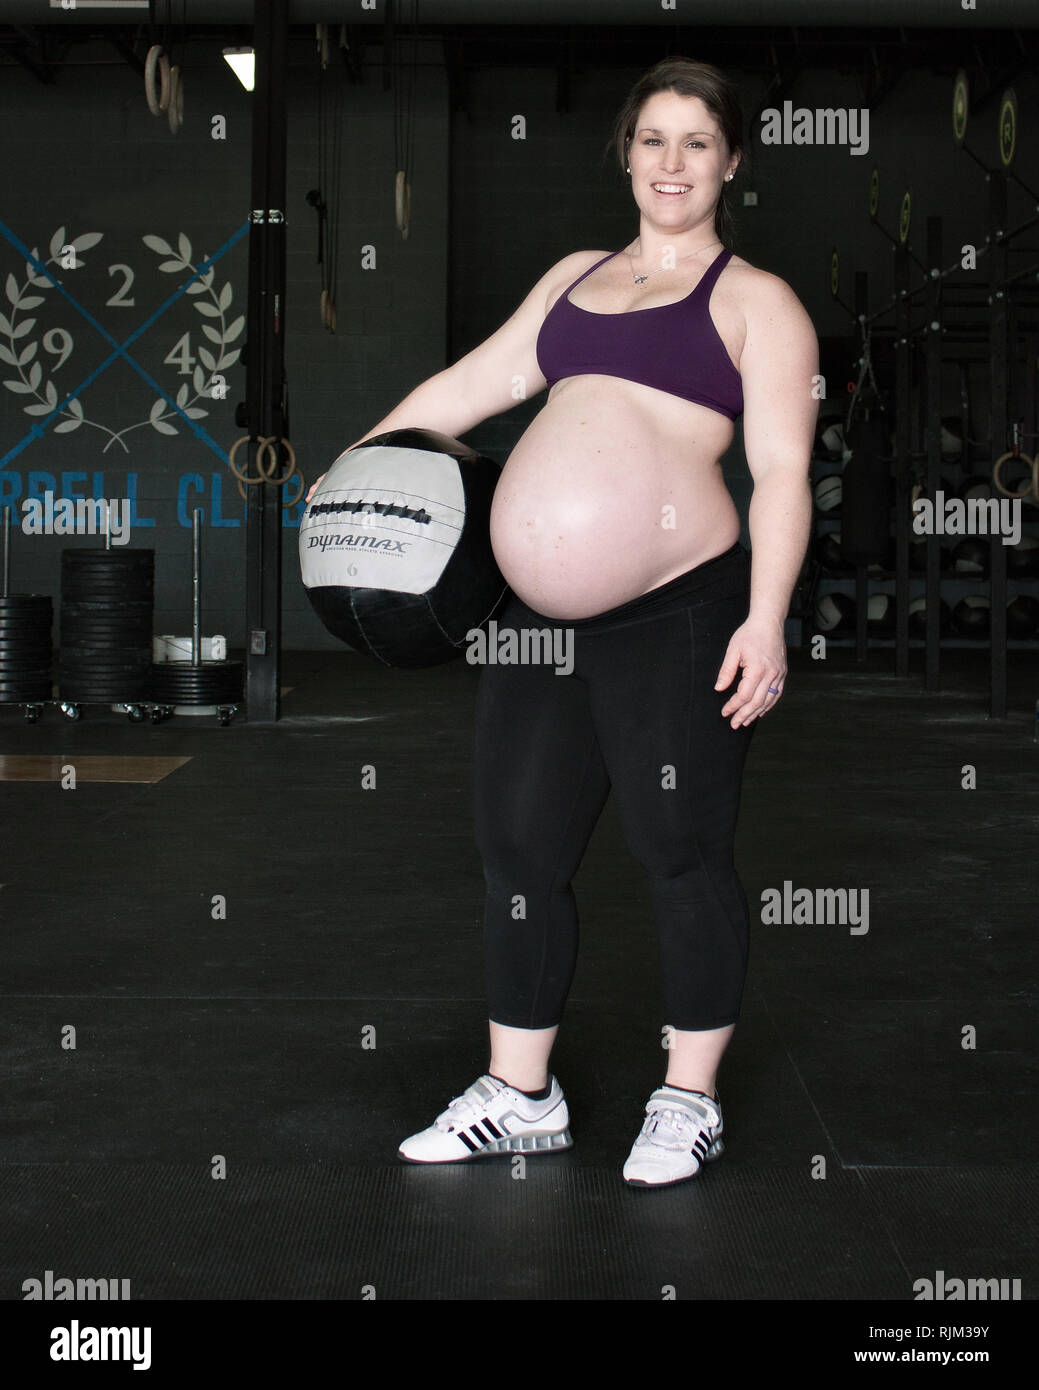 Pregnant crossfit Stock Photo